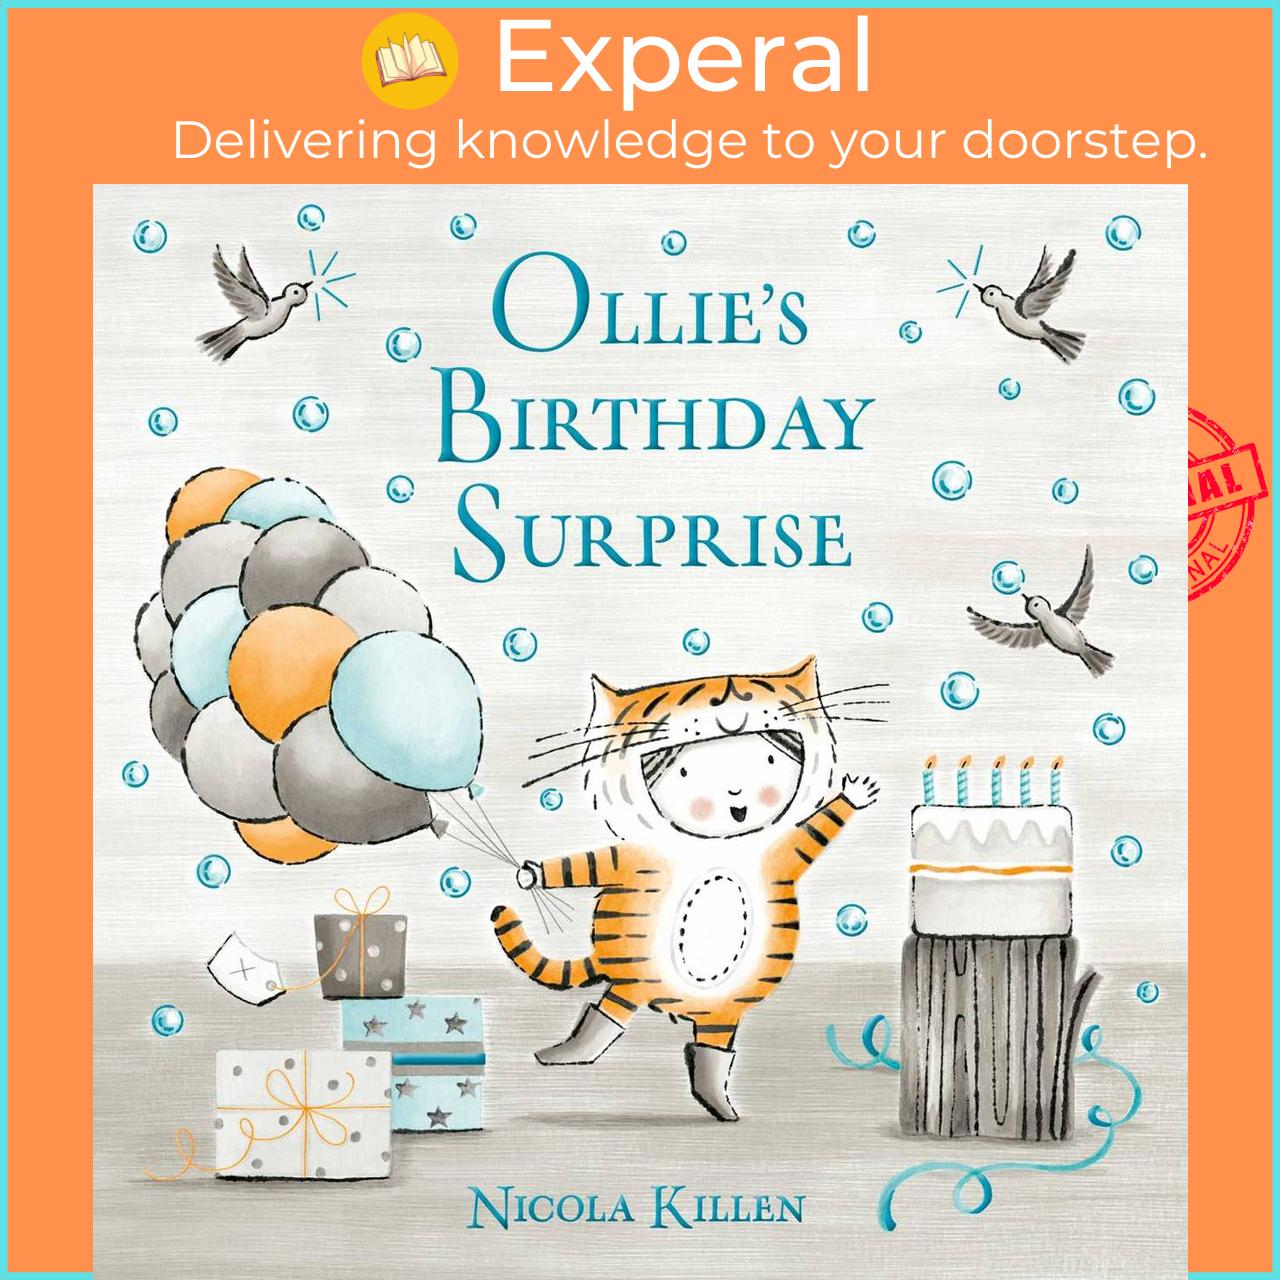 Sách - Ollie's Birthday Surprise by Nicola Killen (UK edition, paperback)